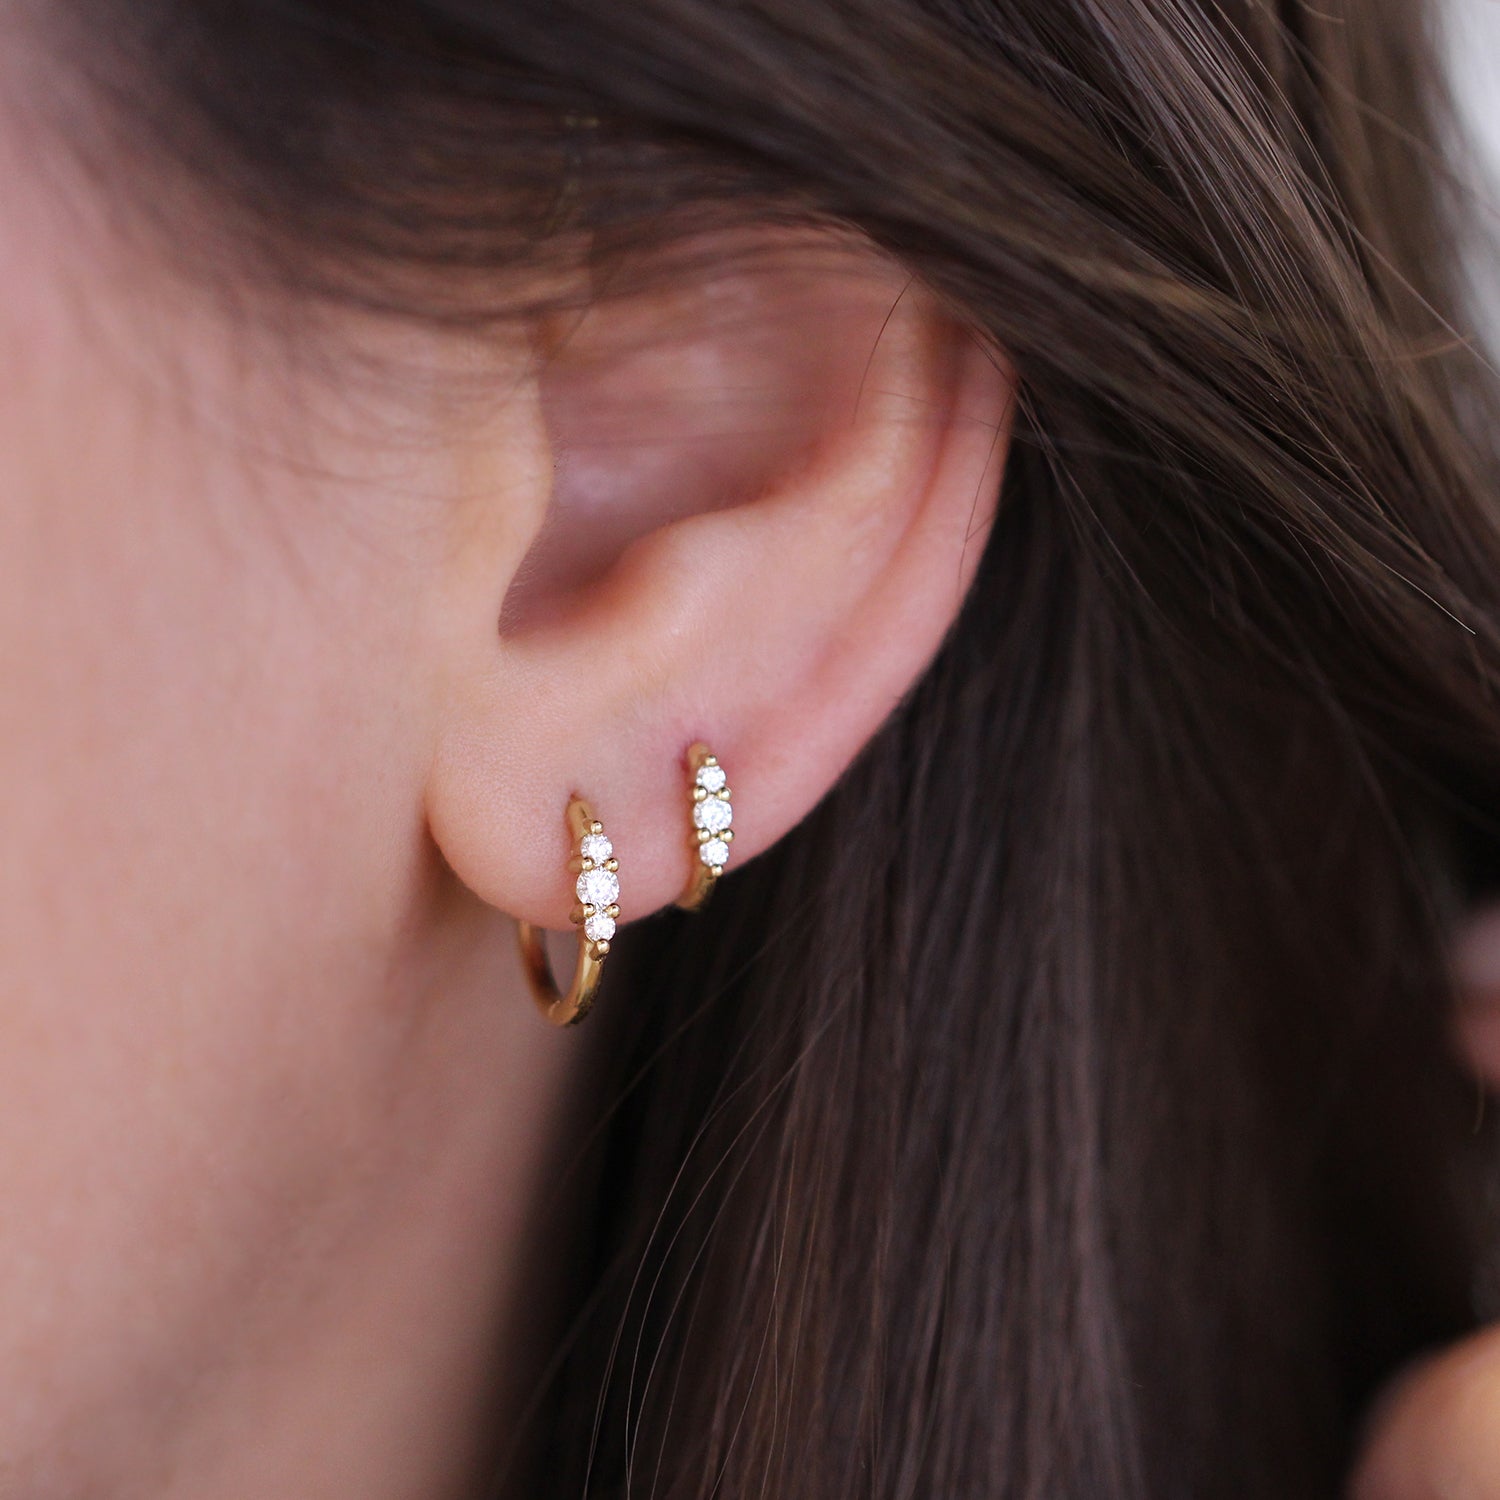 Audrey Mini Hoop Earrings with White Diamonds